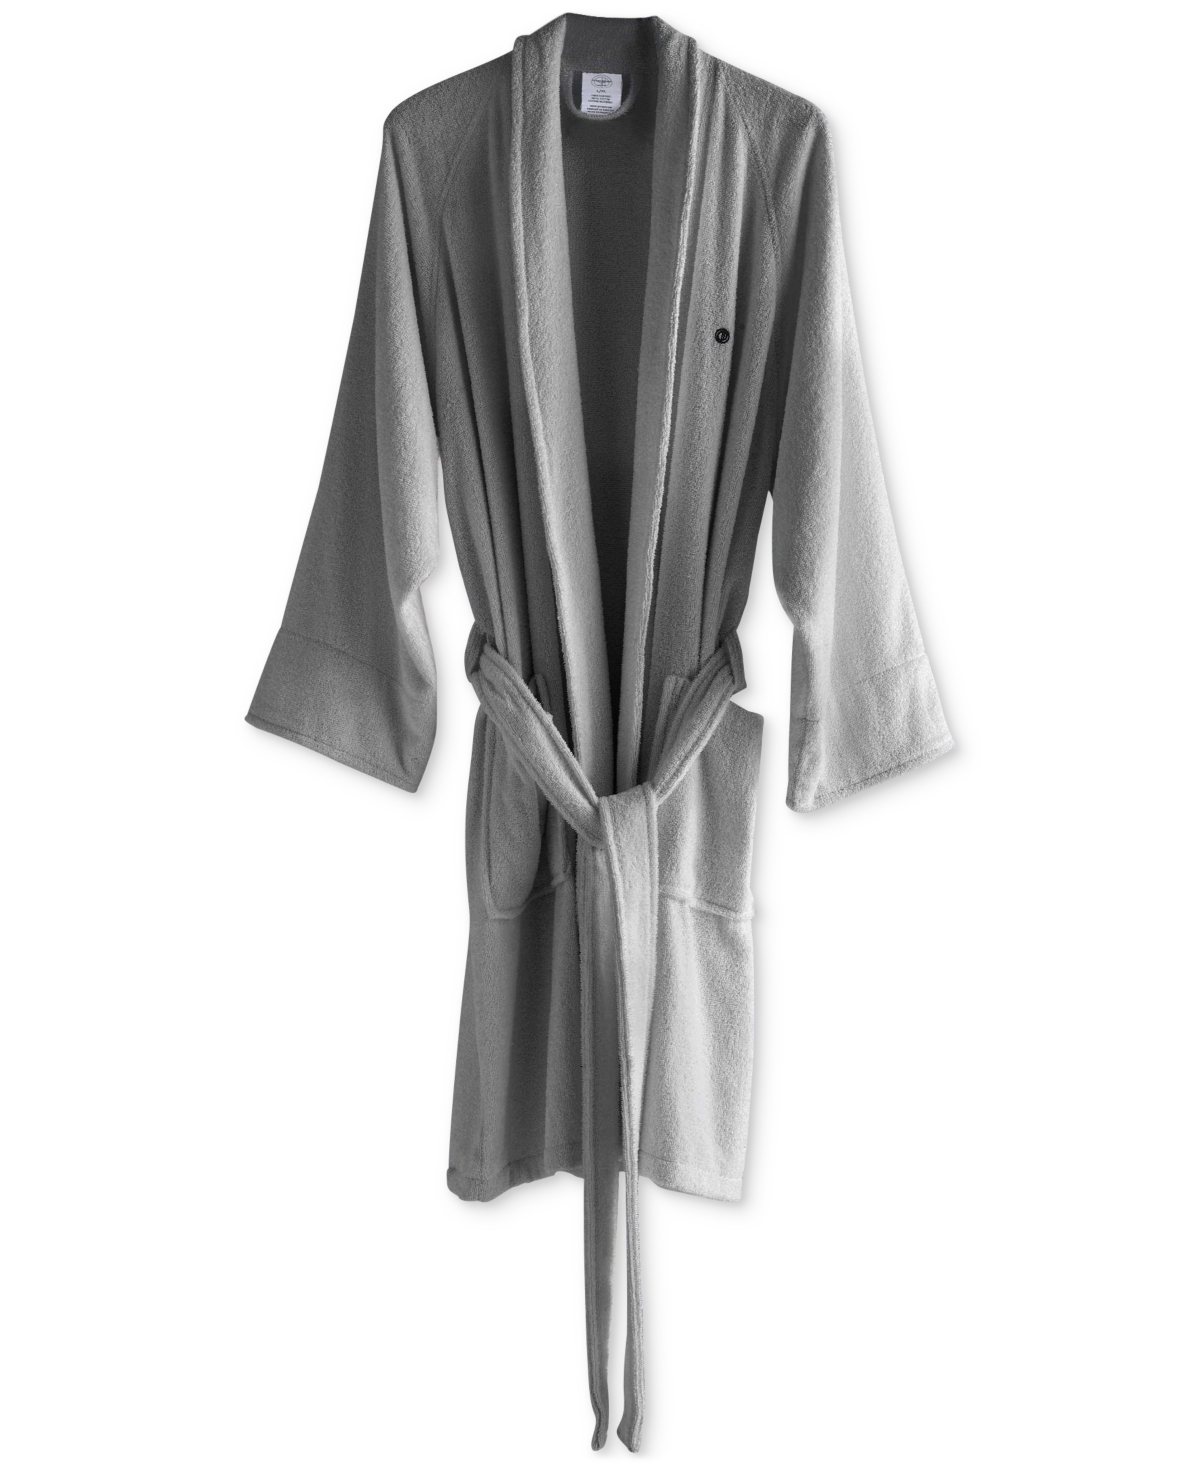 x Martex Low Lint 100% Cotton Robe - Gray